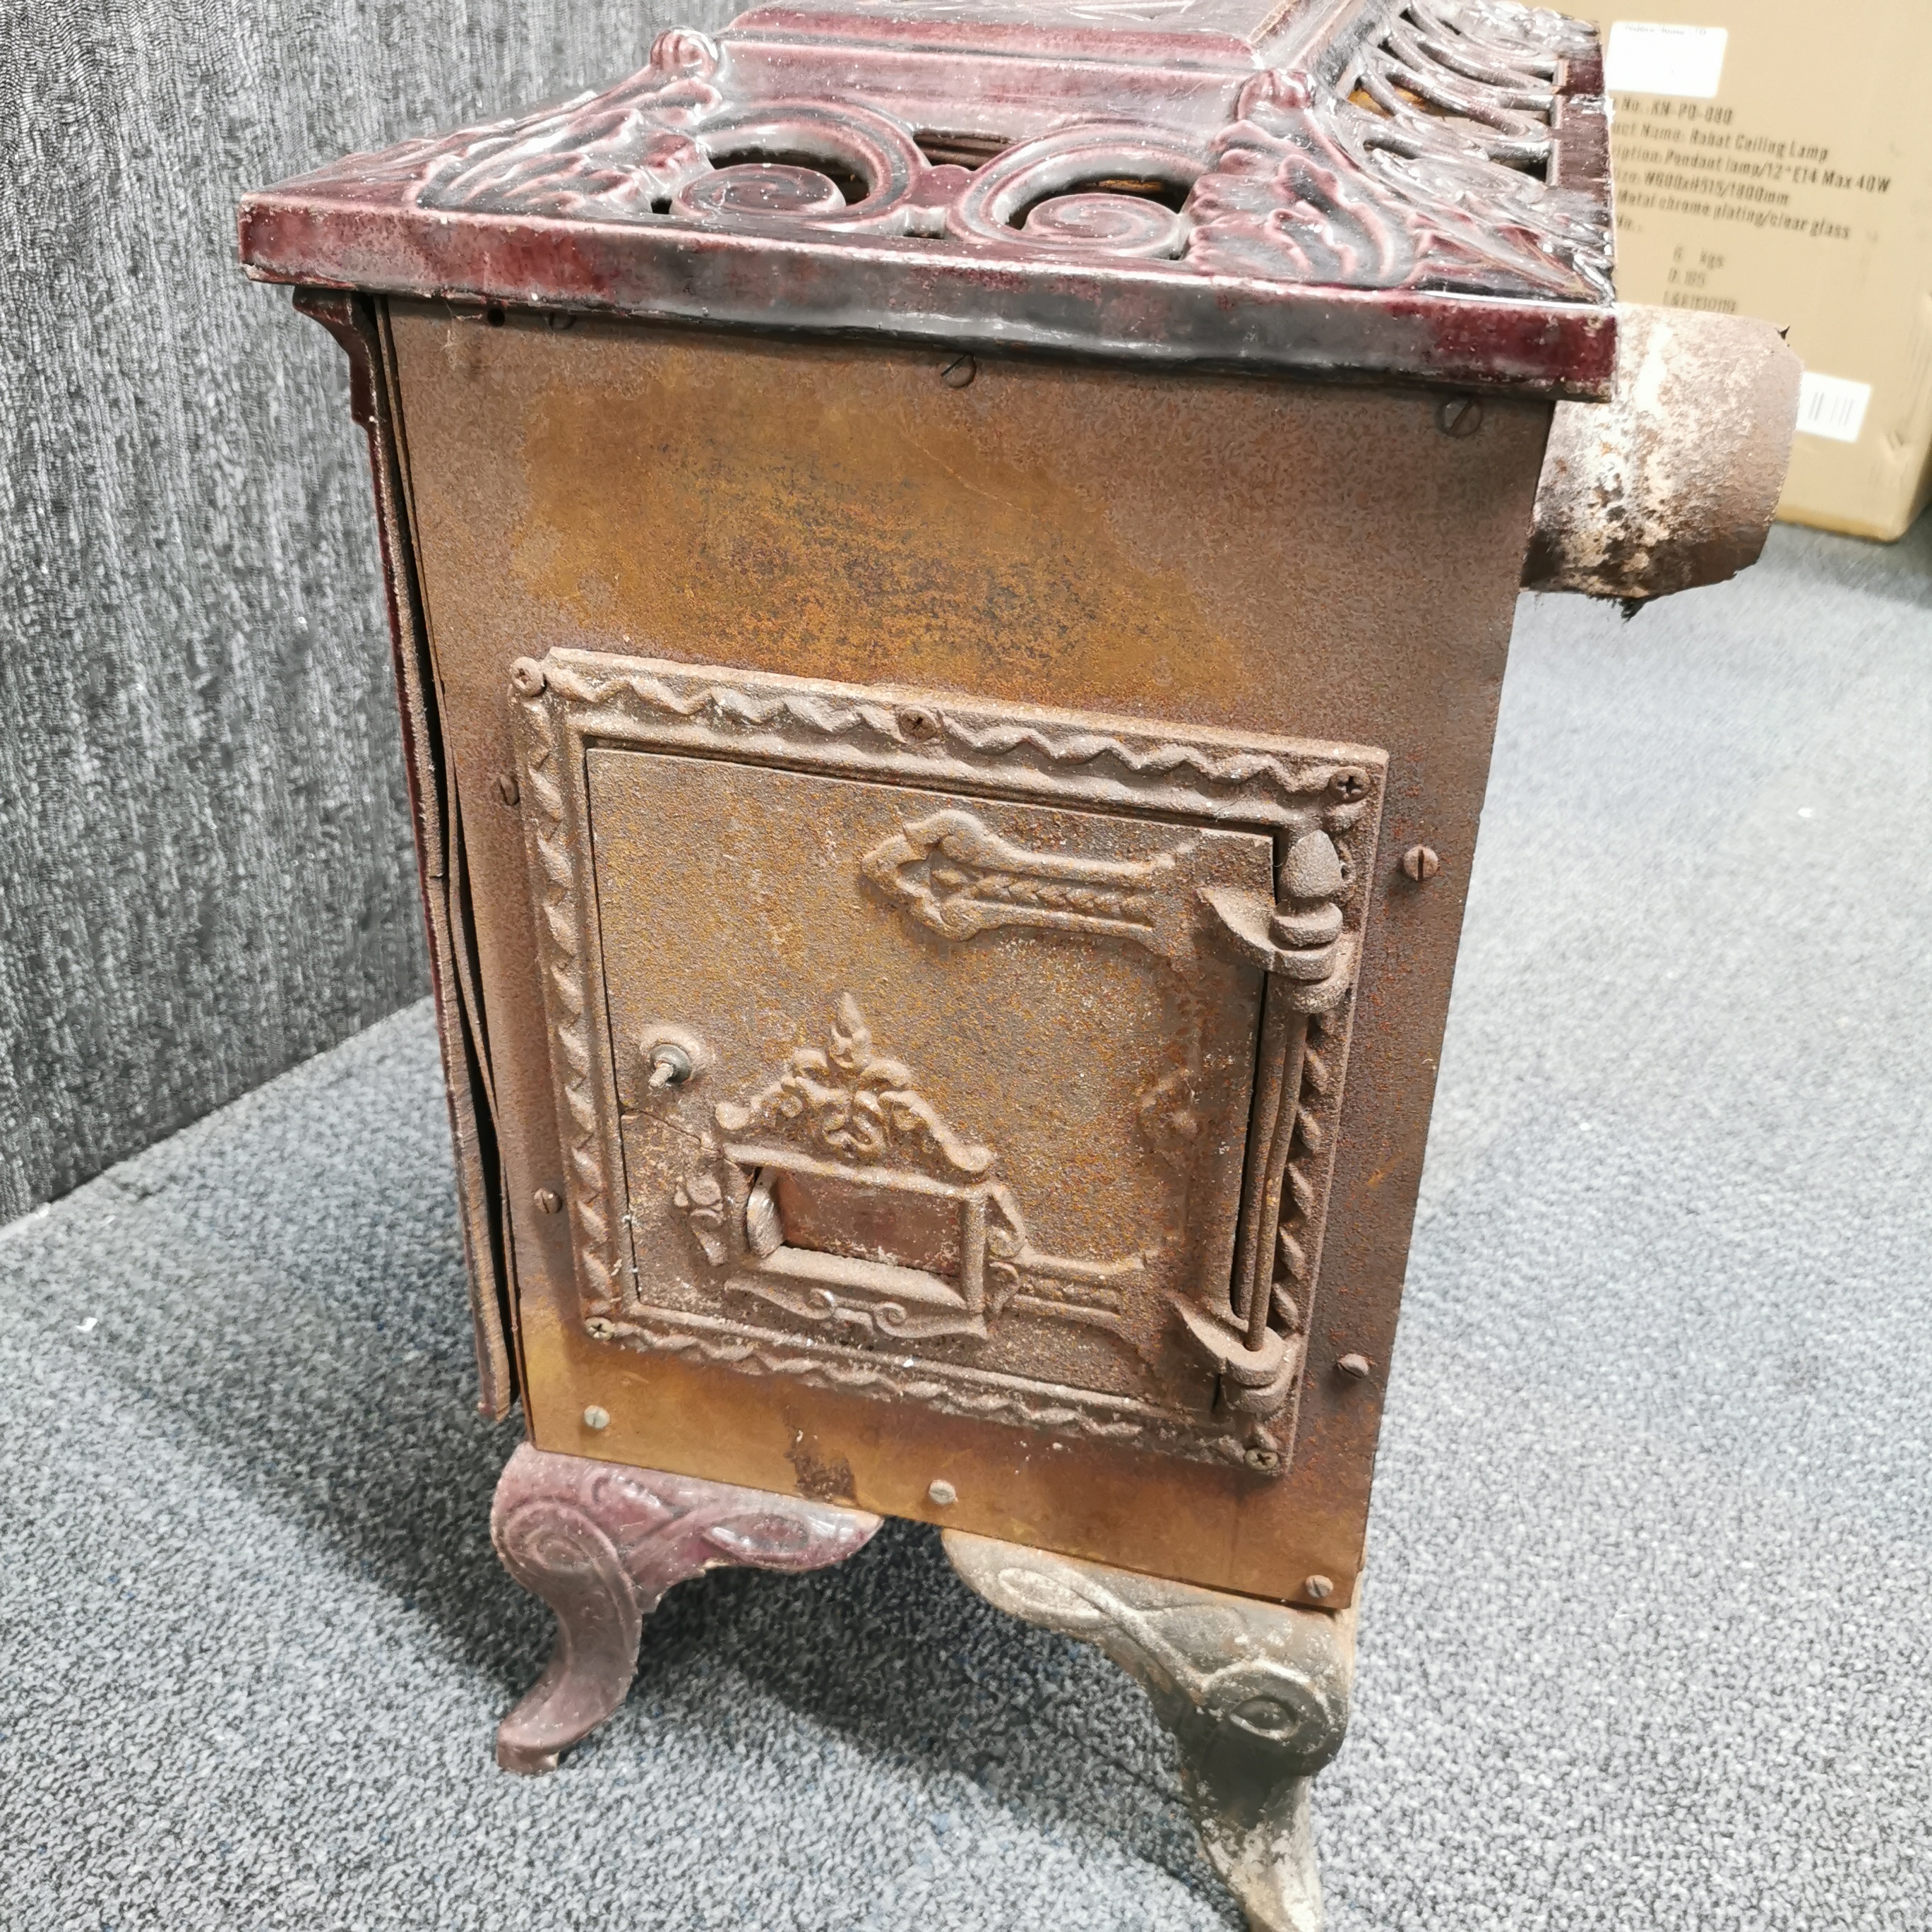 An antique French 'Phebus' enamelled wood burning stove, 50 x 55 x 38cm. - Image 5 of 6